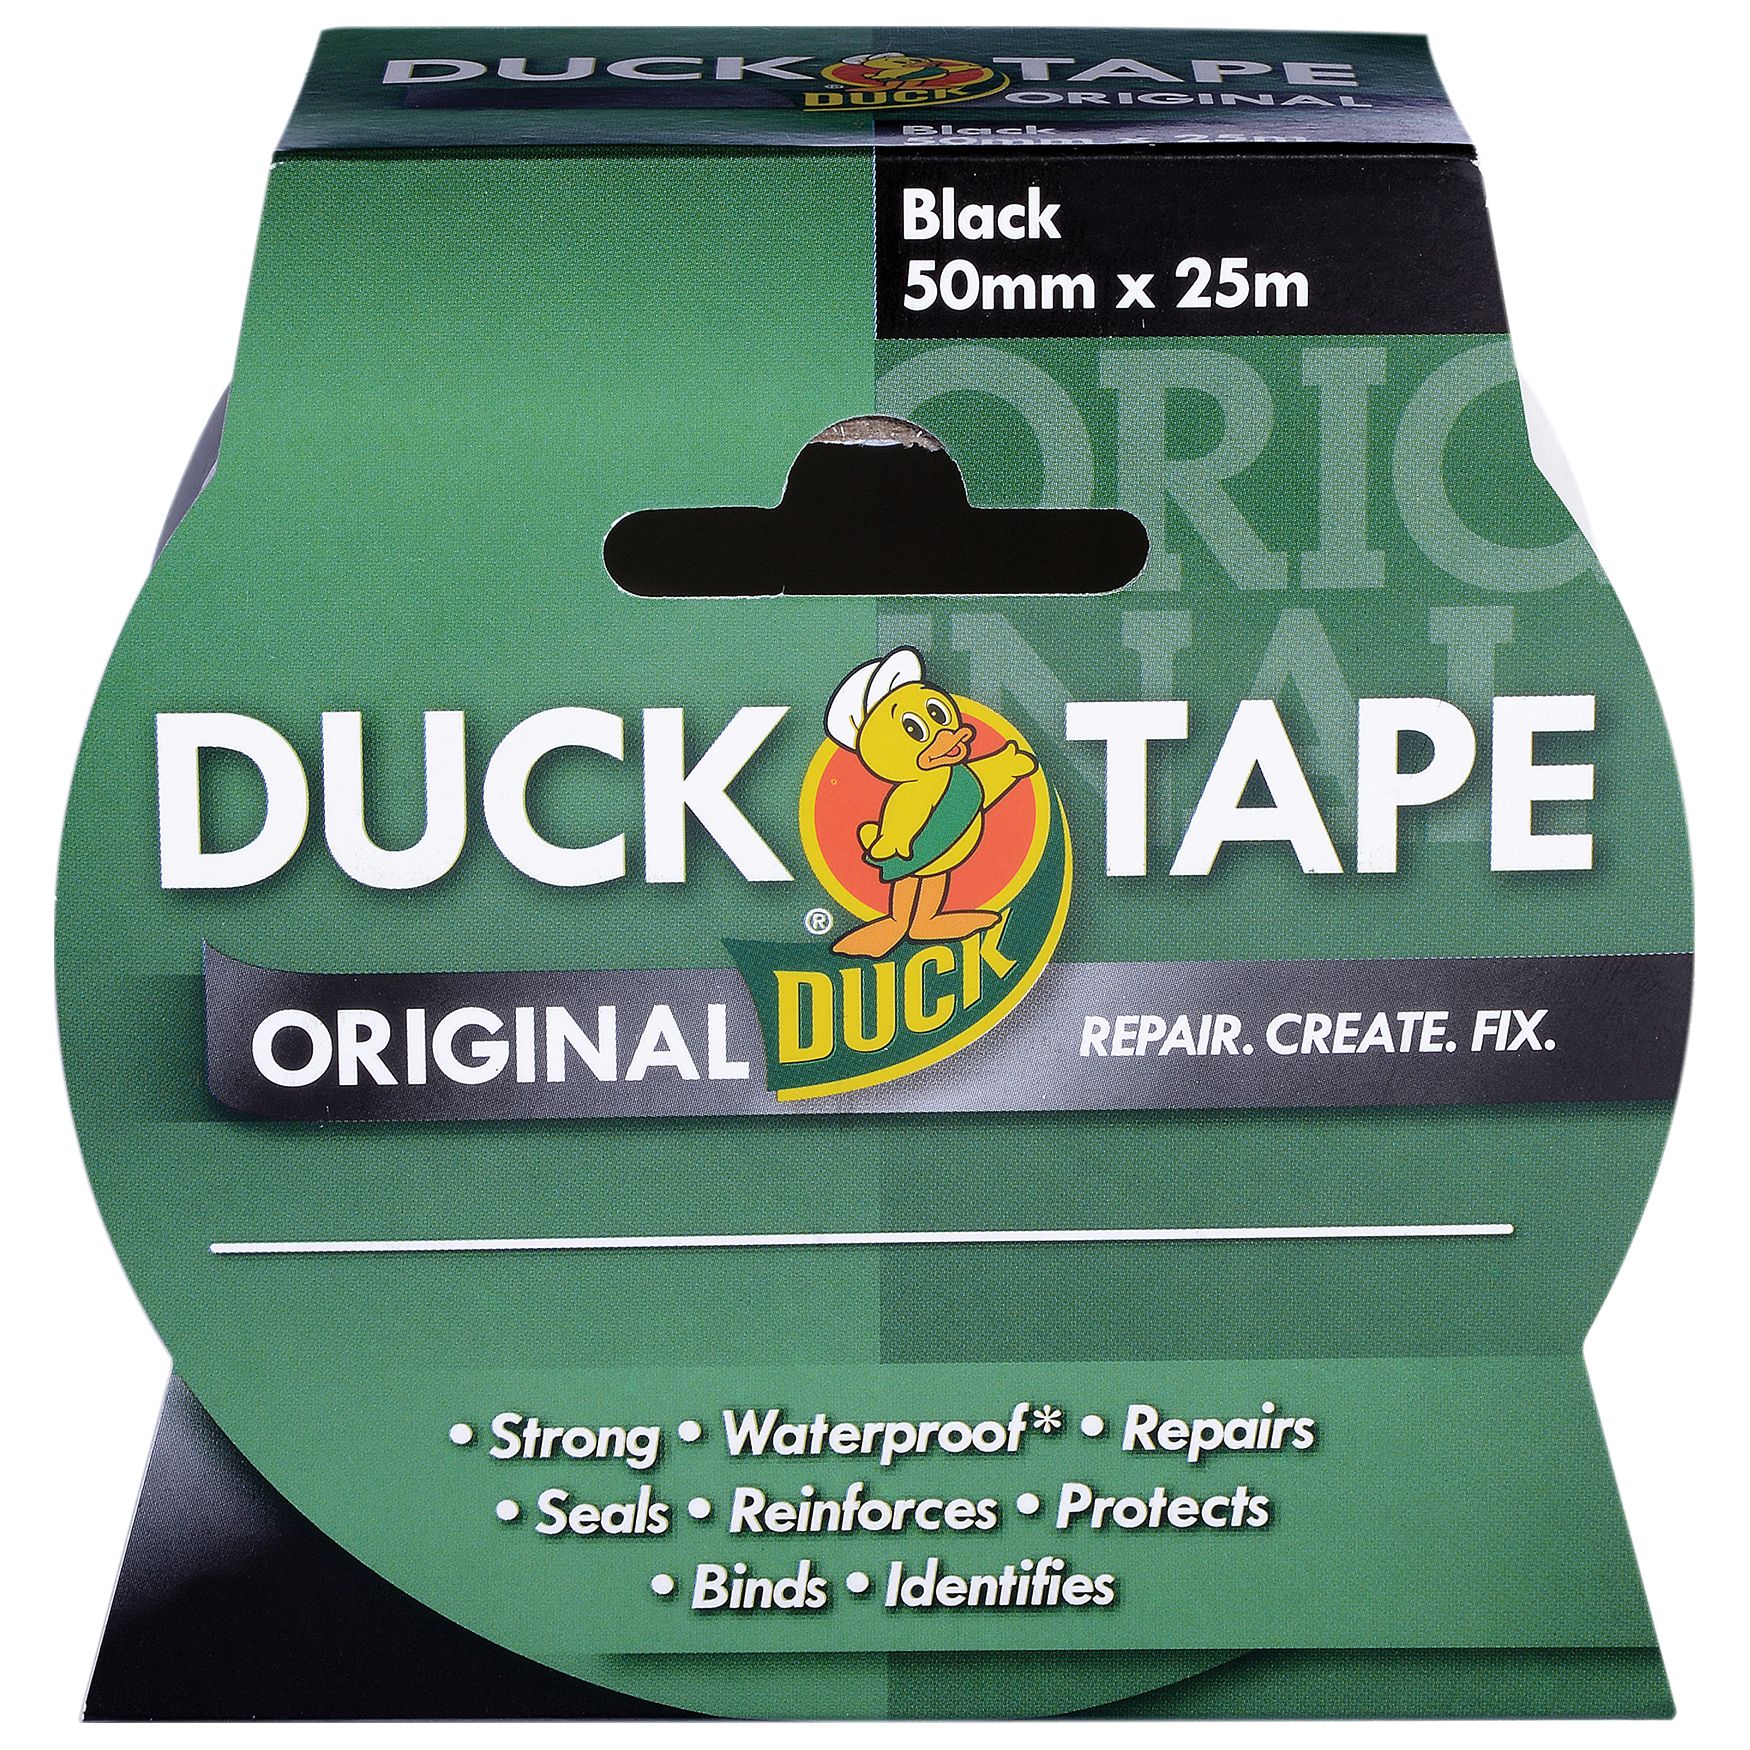 Image of Duck Tape Original Black 50mm x 25m